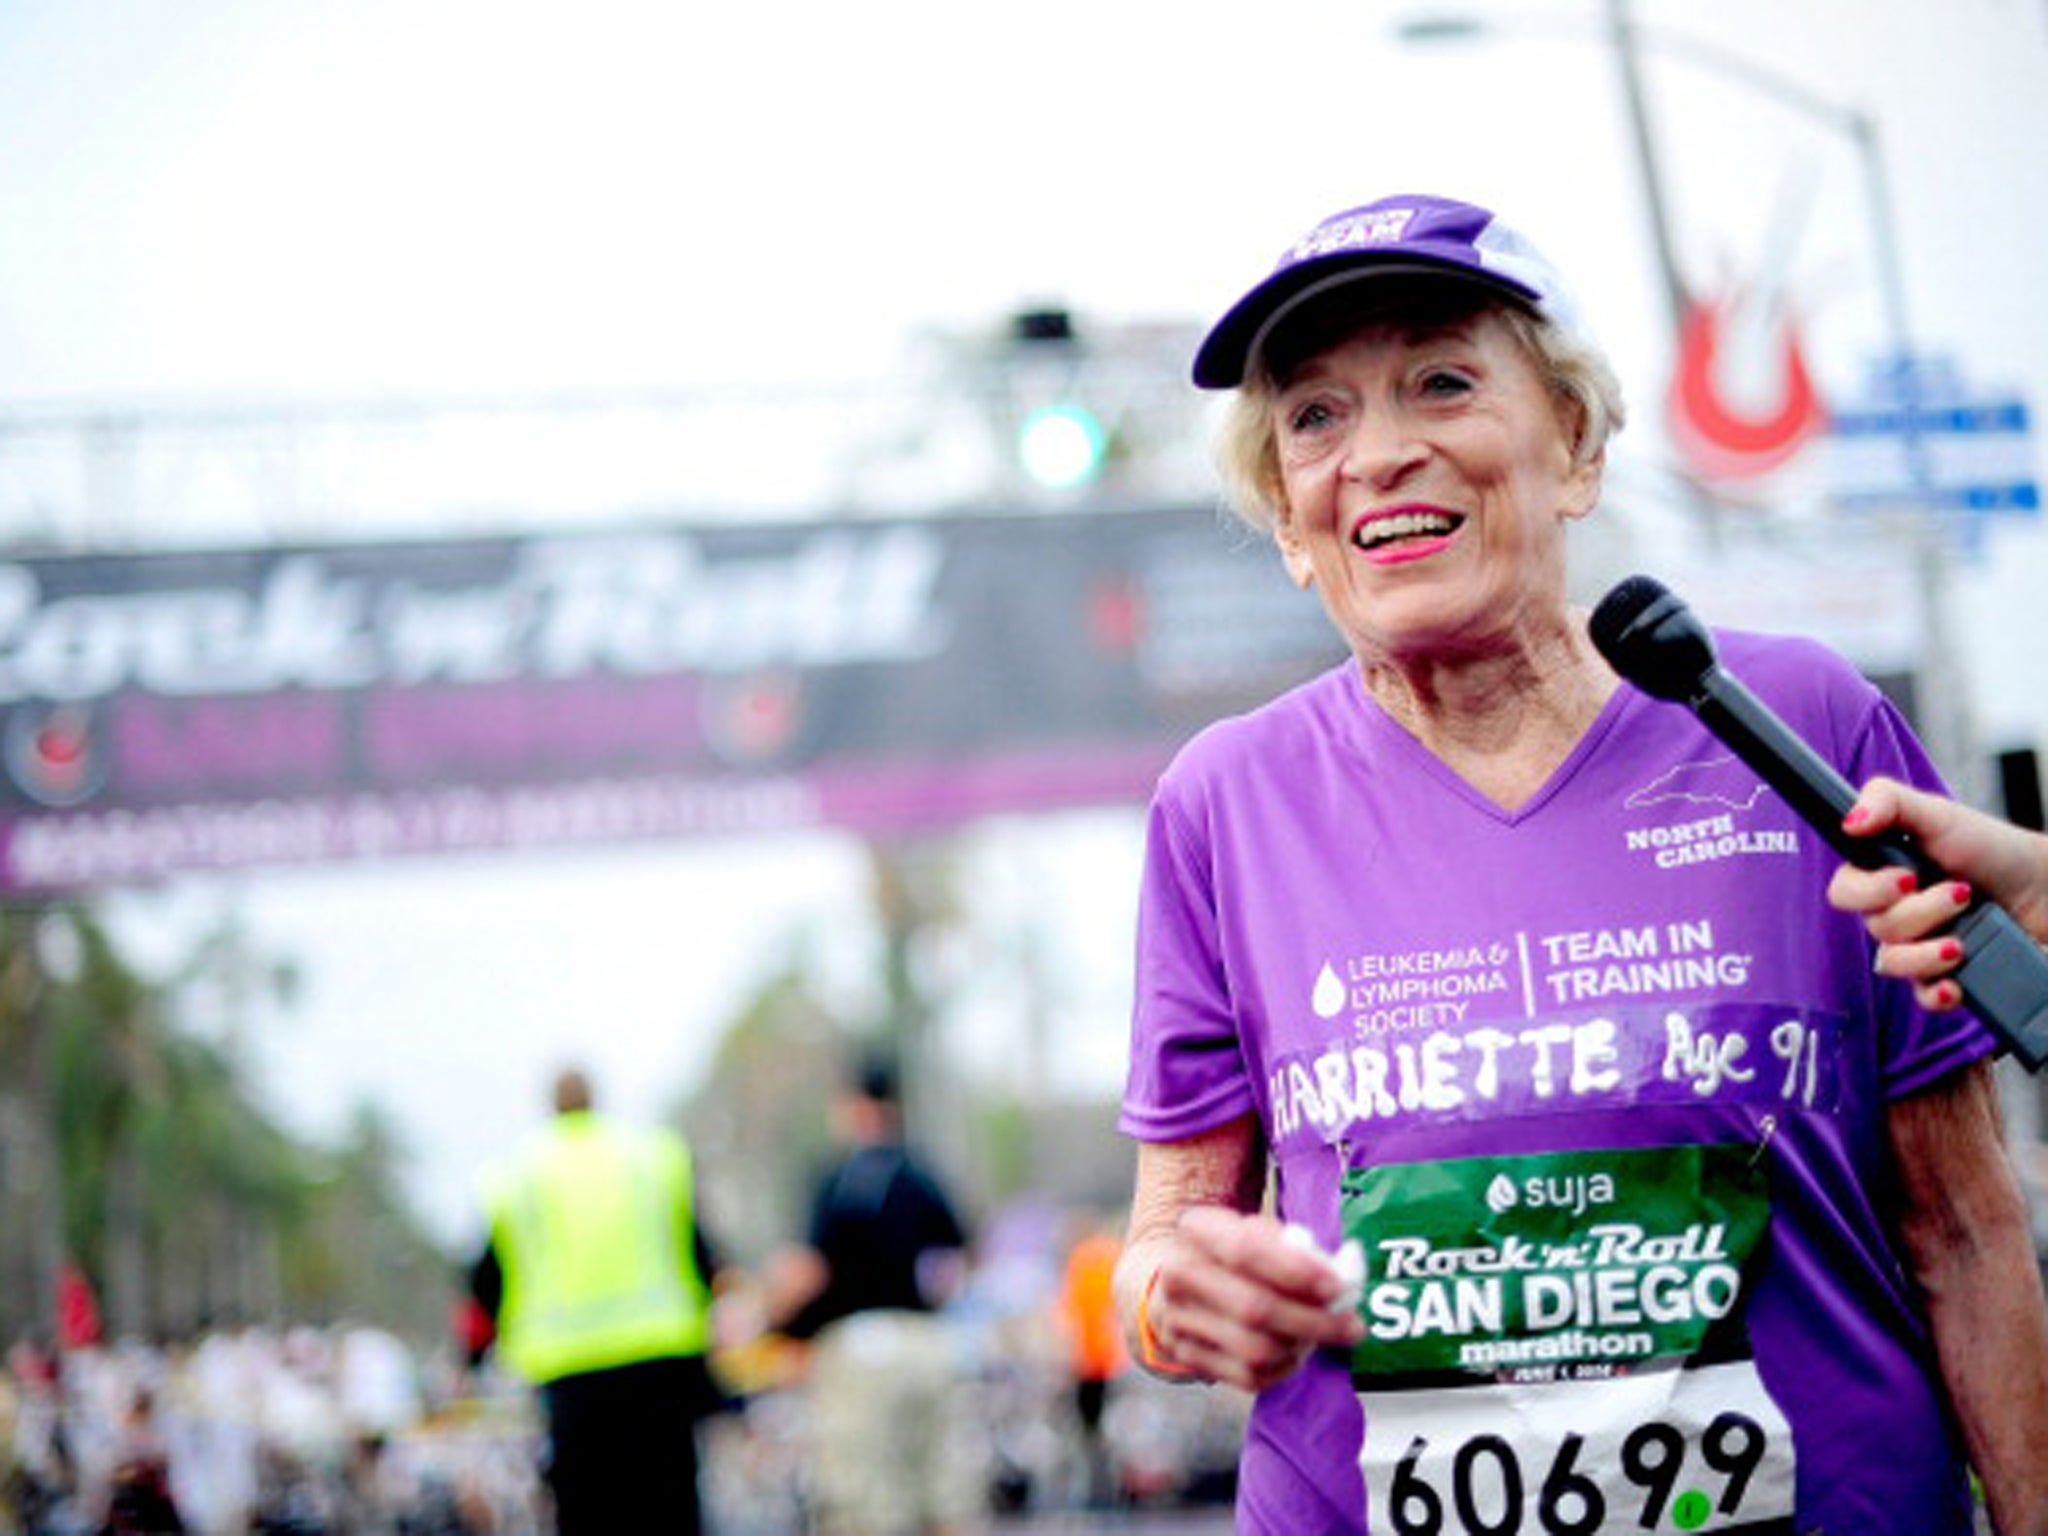 91 year old Marathon participant Harriette Thompson participates in the Rock 'n' Roll San Diego Marathon & Half Marathon to benefit the Leukemia & Lymphoma Society on June 1, 2014 in San Diego, California